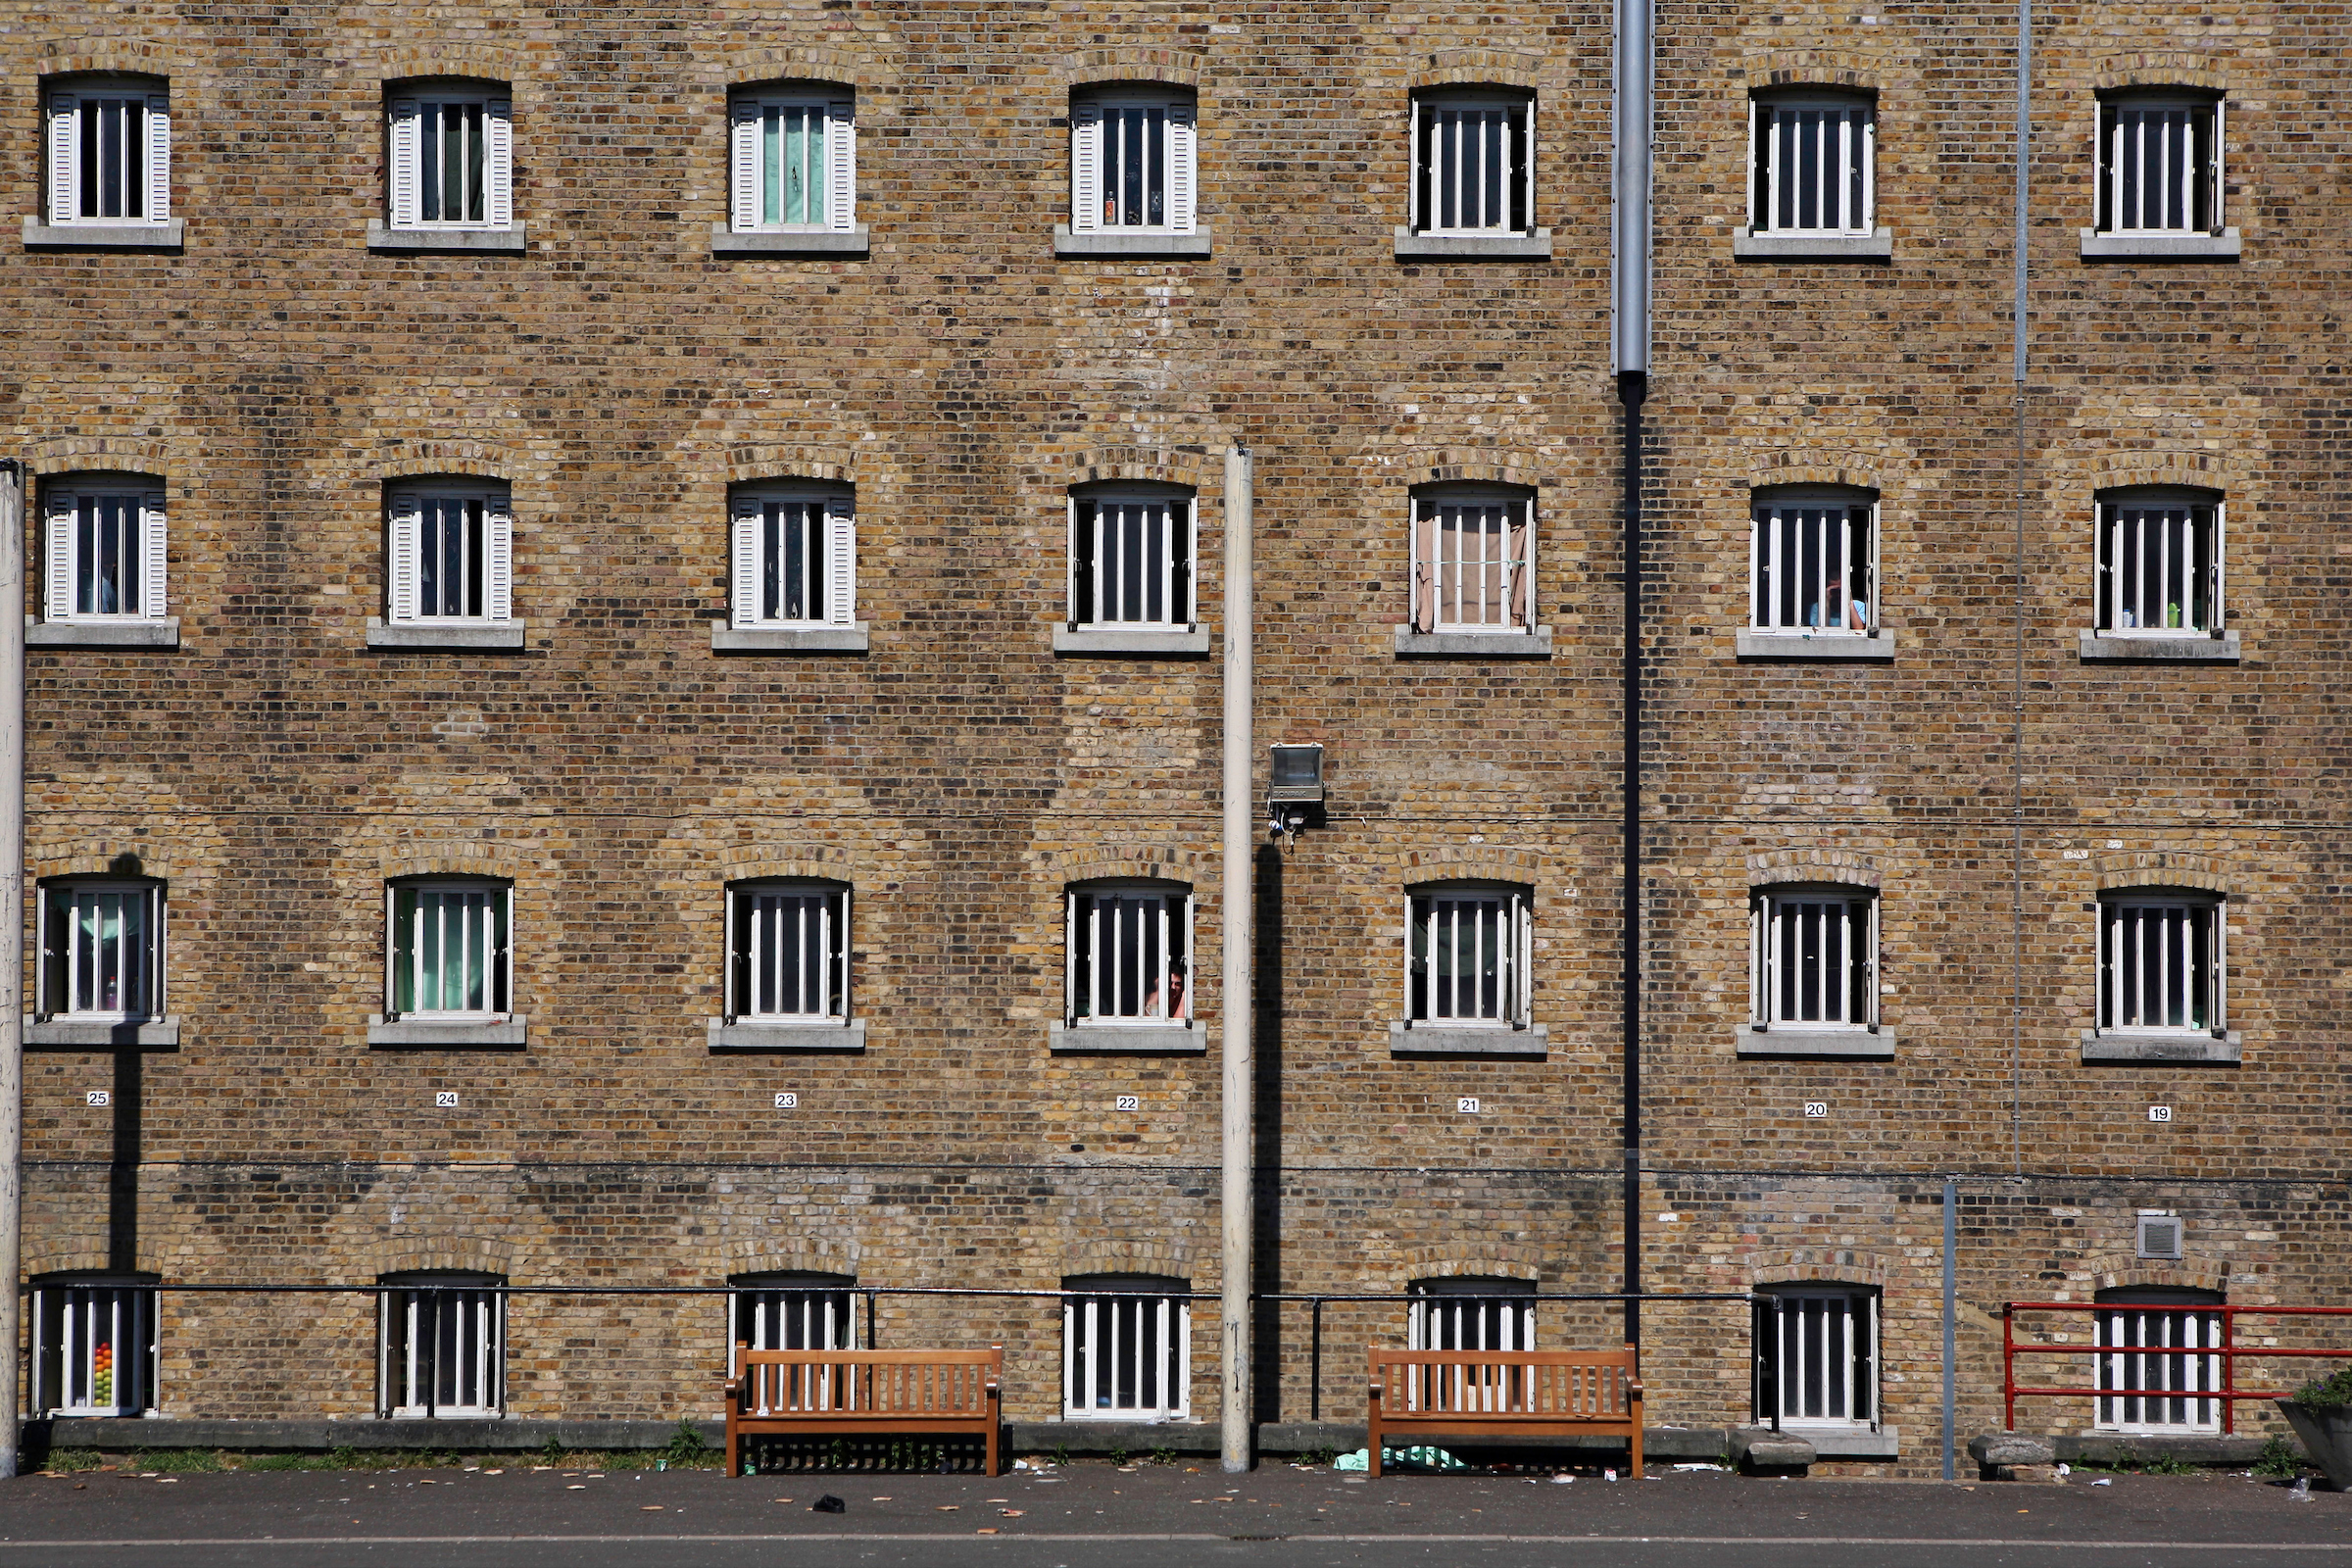 UK – England – Prison